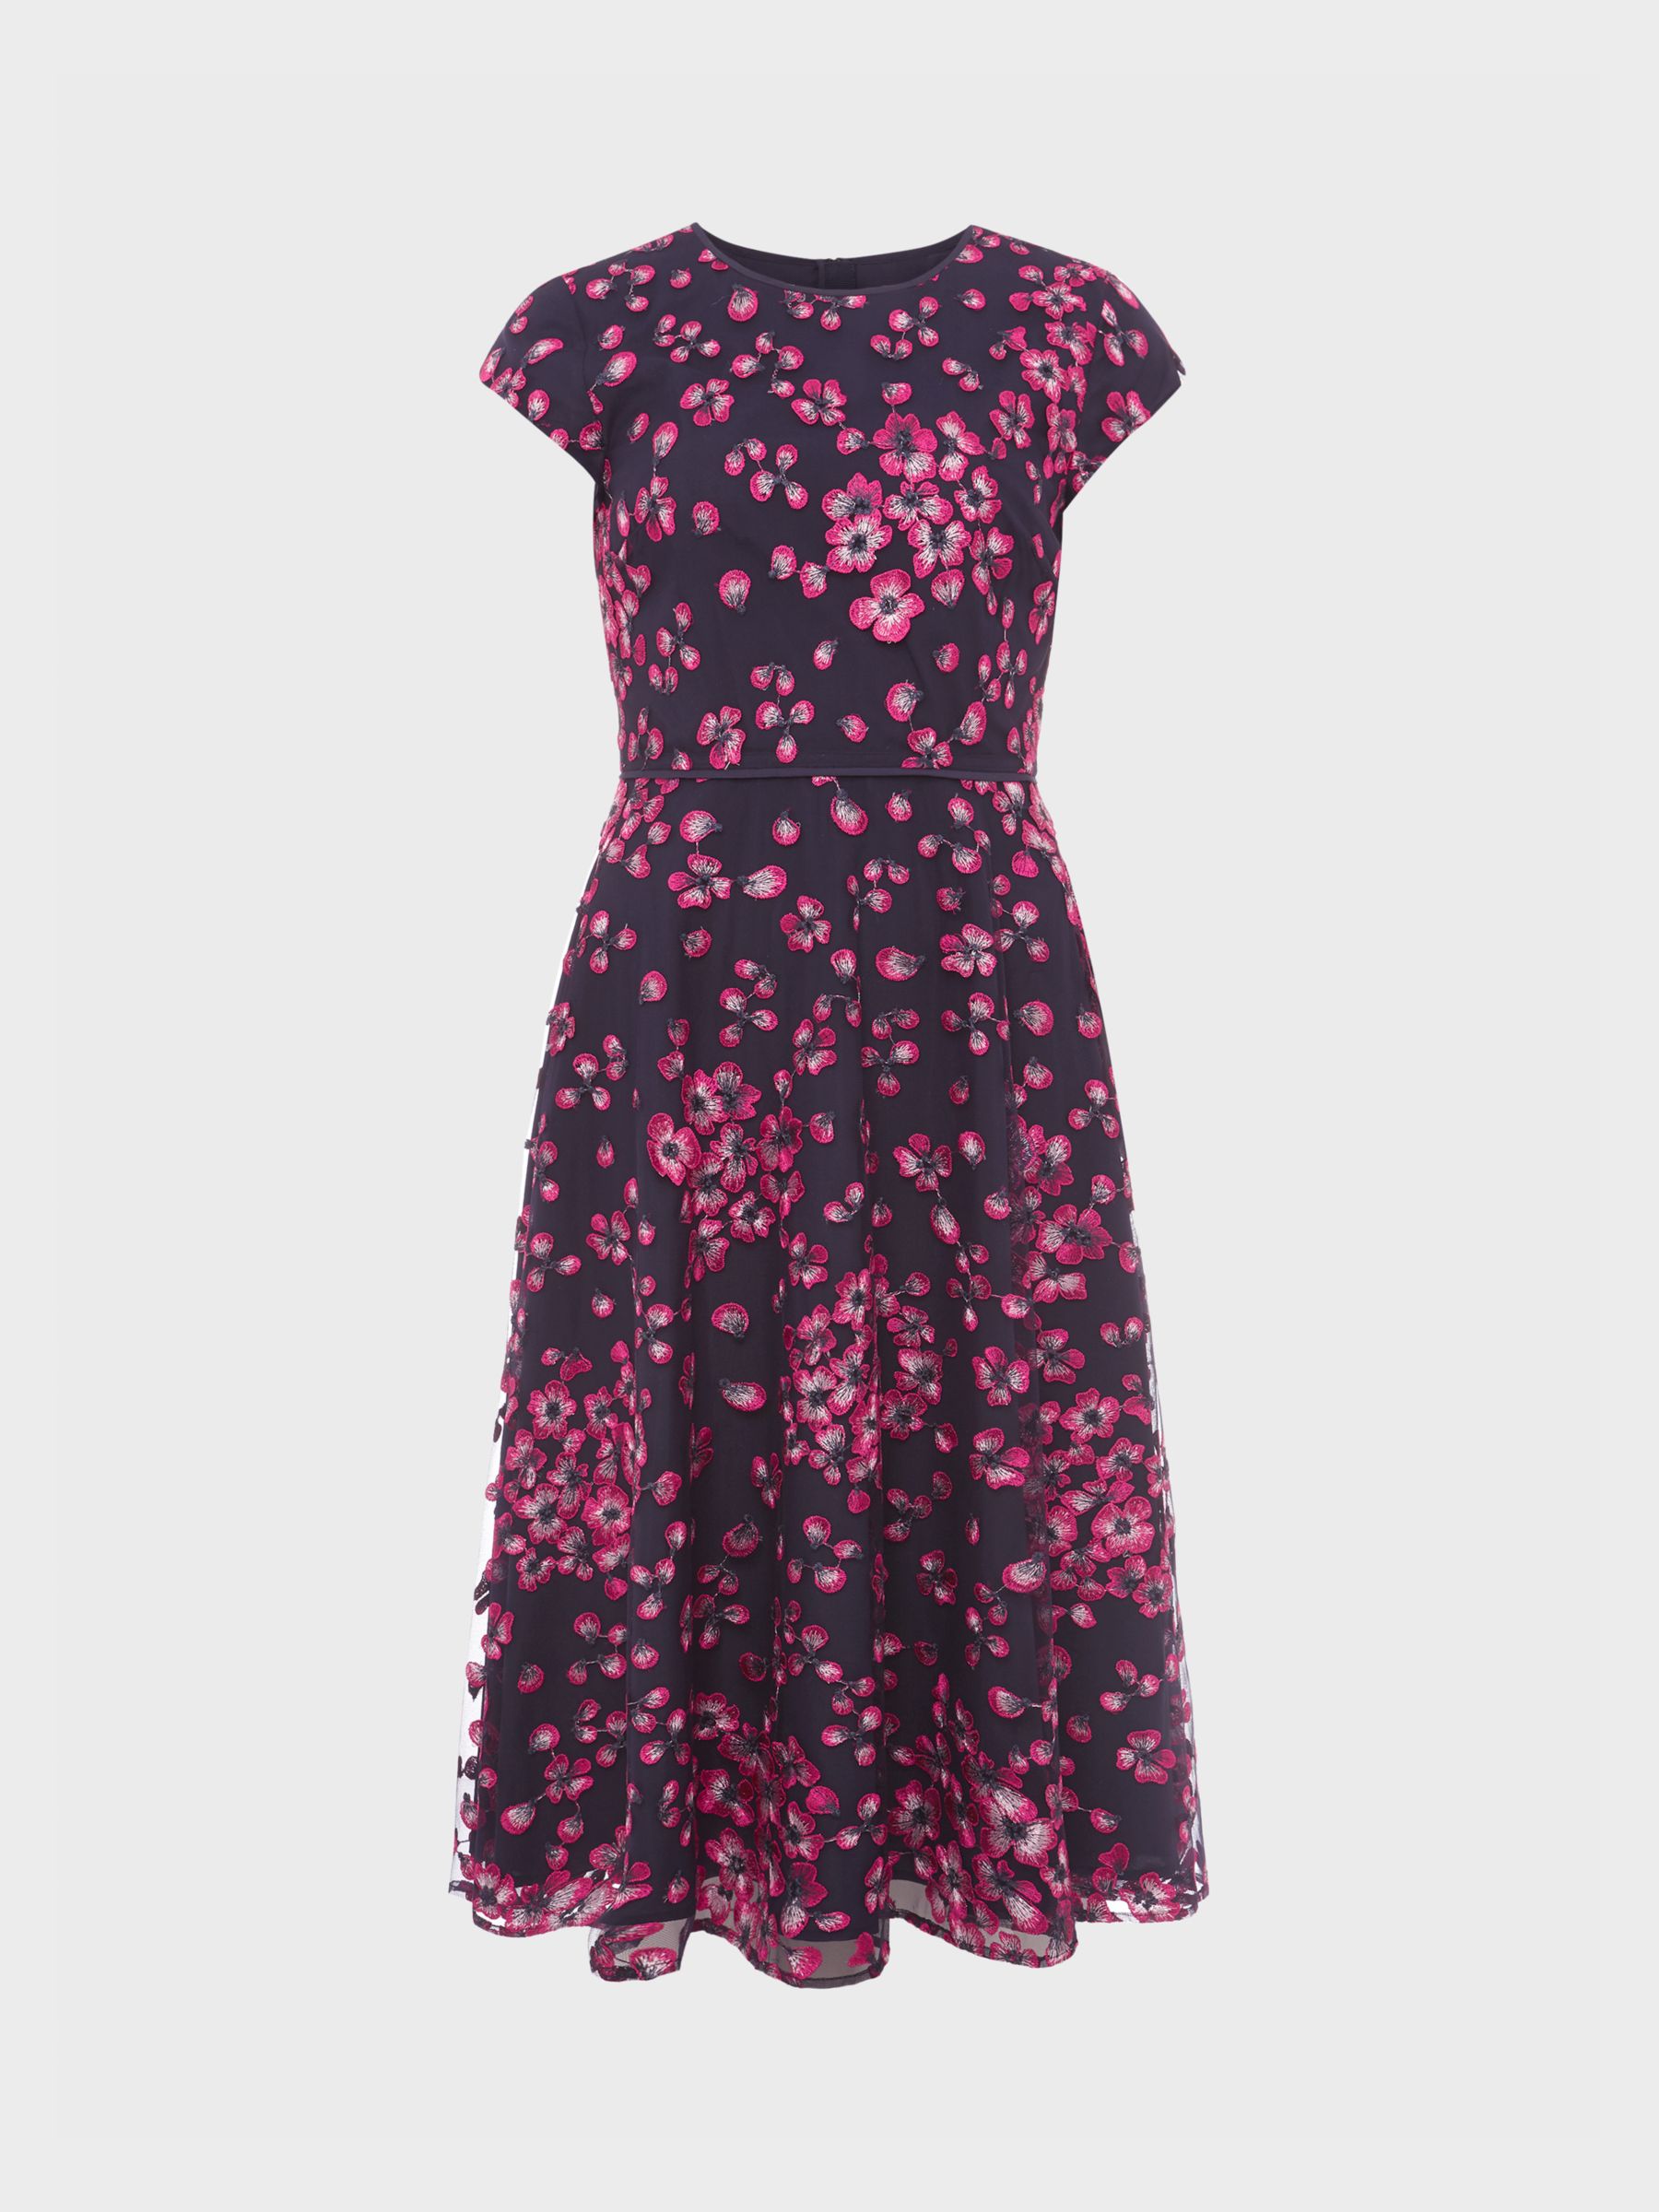 Hobbs Tia Embroidered Dress, Navy/Pink at John Lewis & Partners